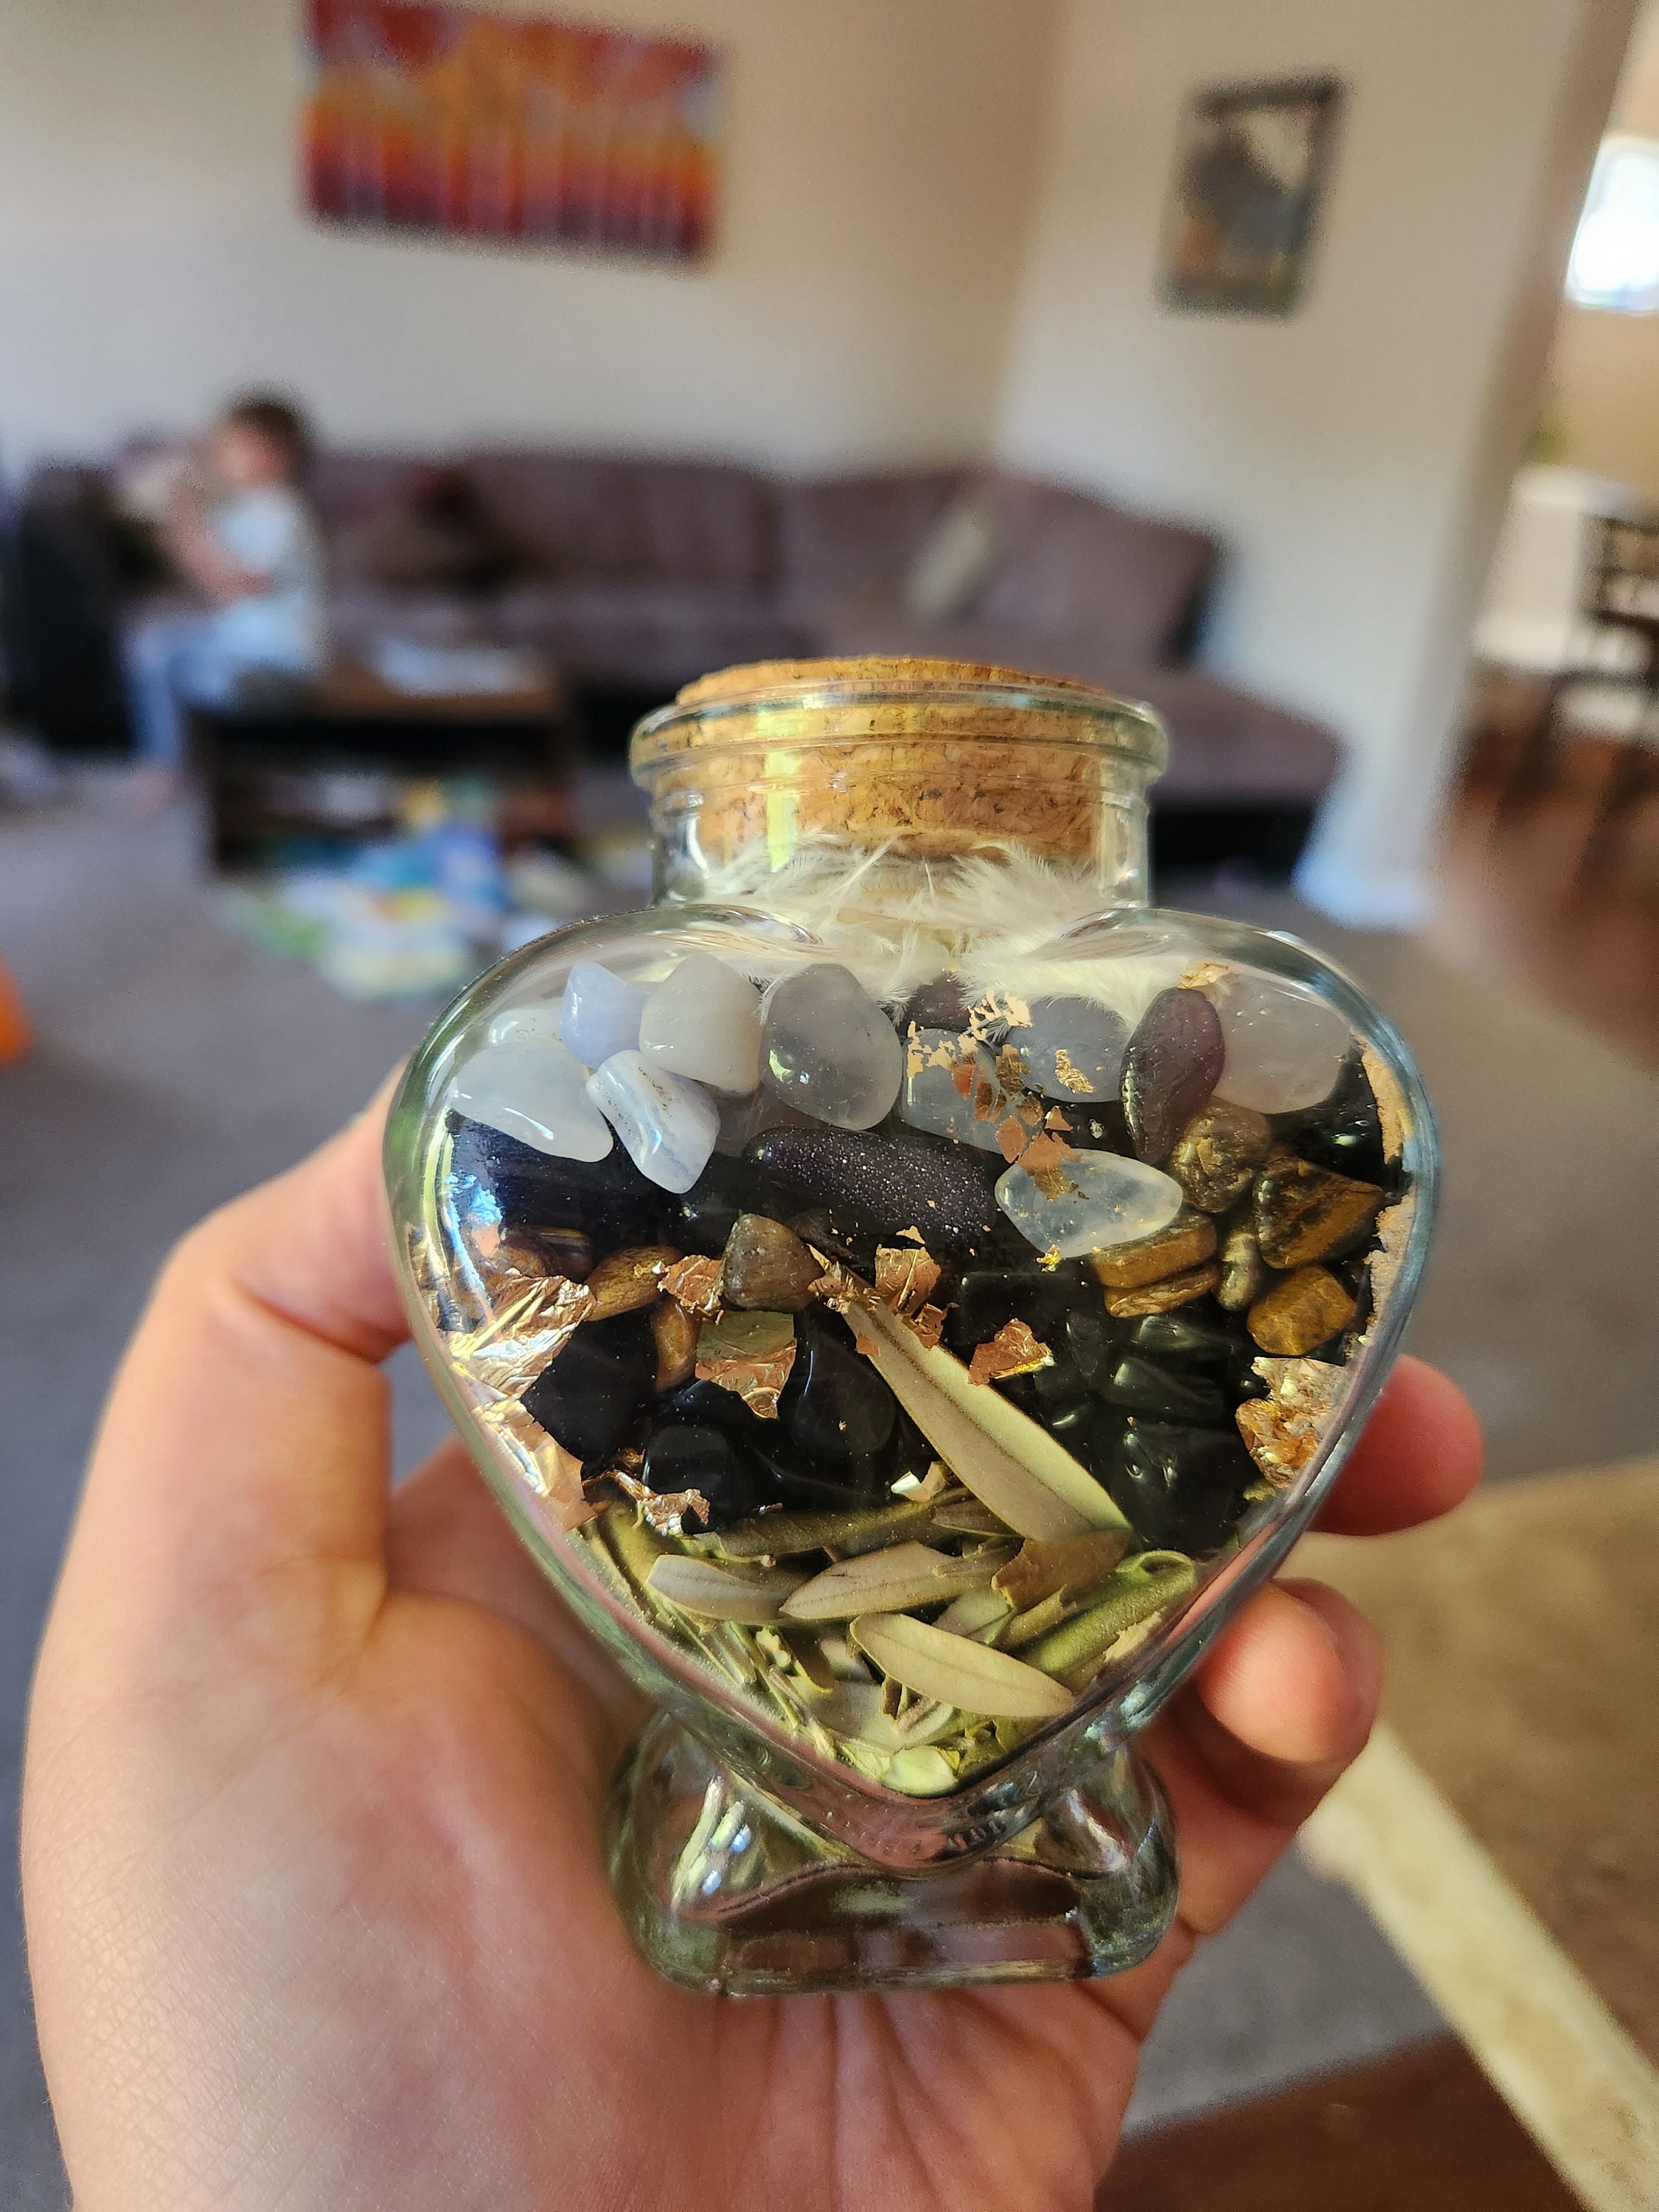 Mini Heremes Jar